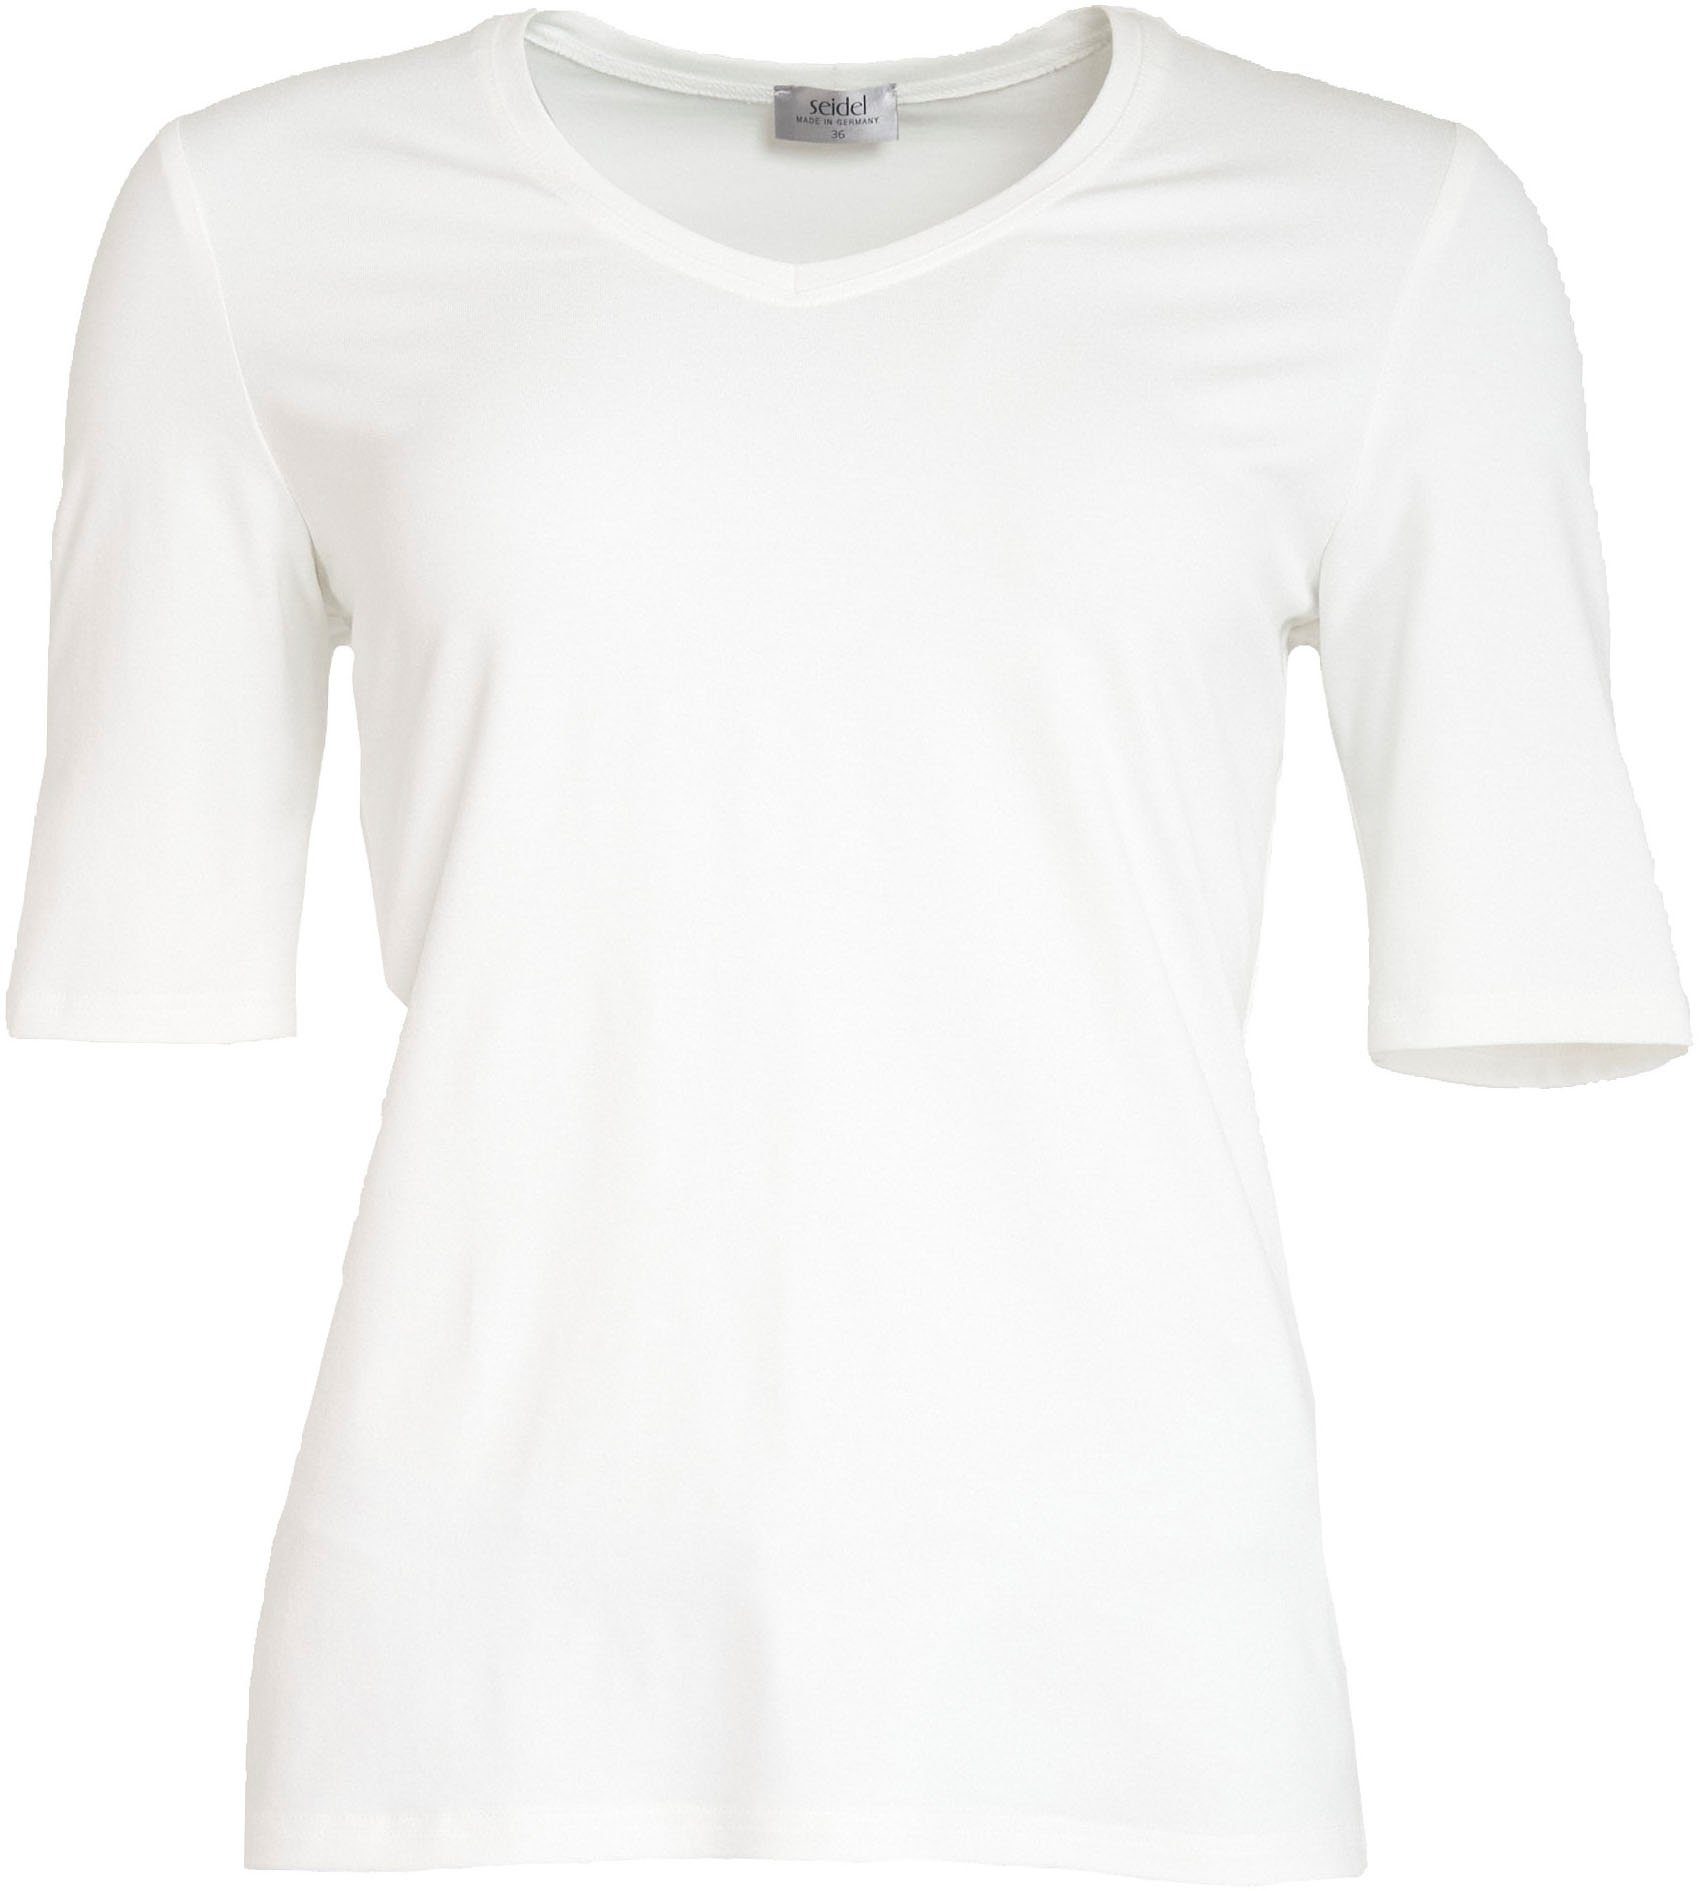 Seidel Moden V-Shirt mit softem GERMANY aus Material, IN Halbarm offwhite MADE